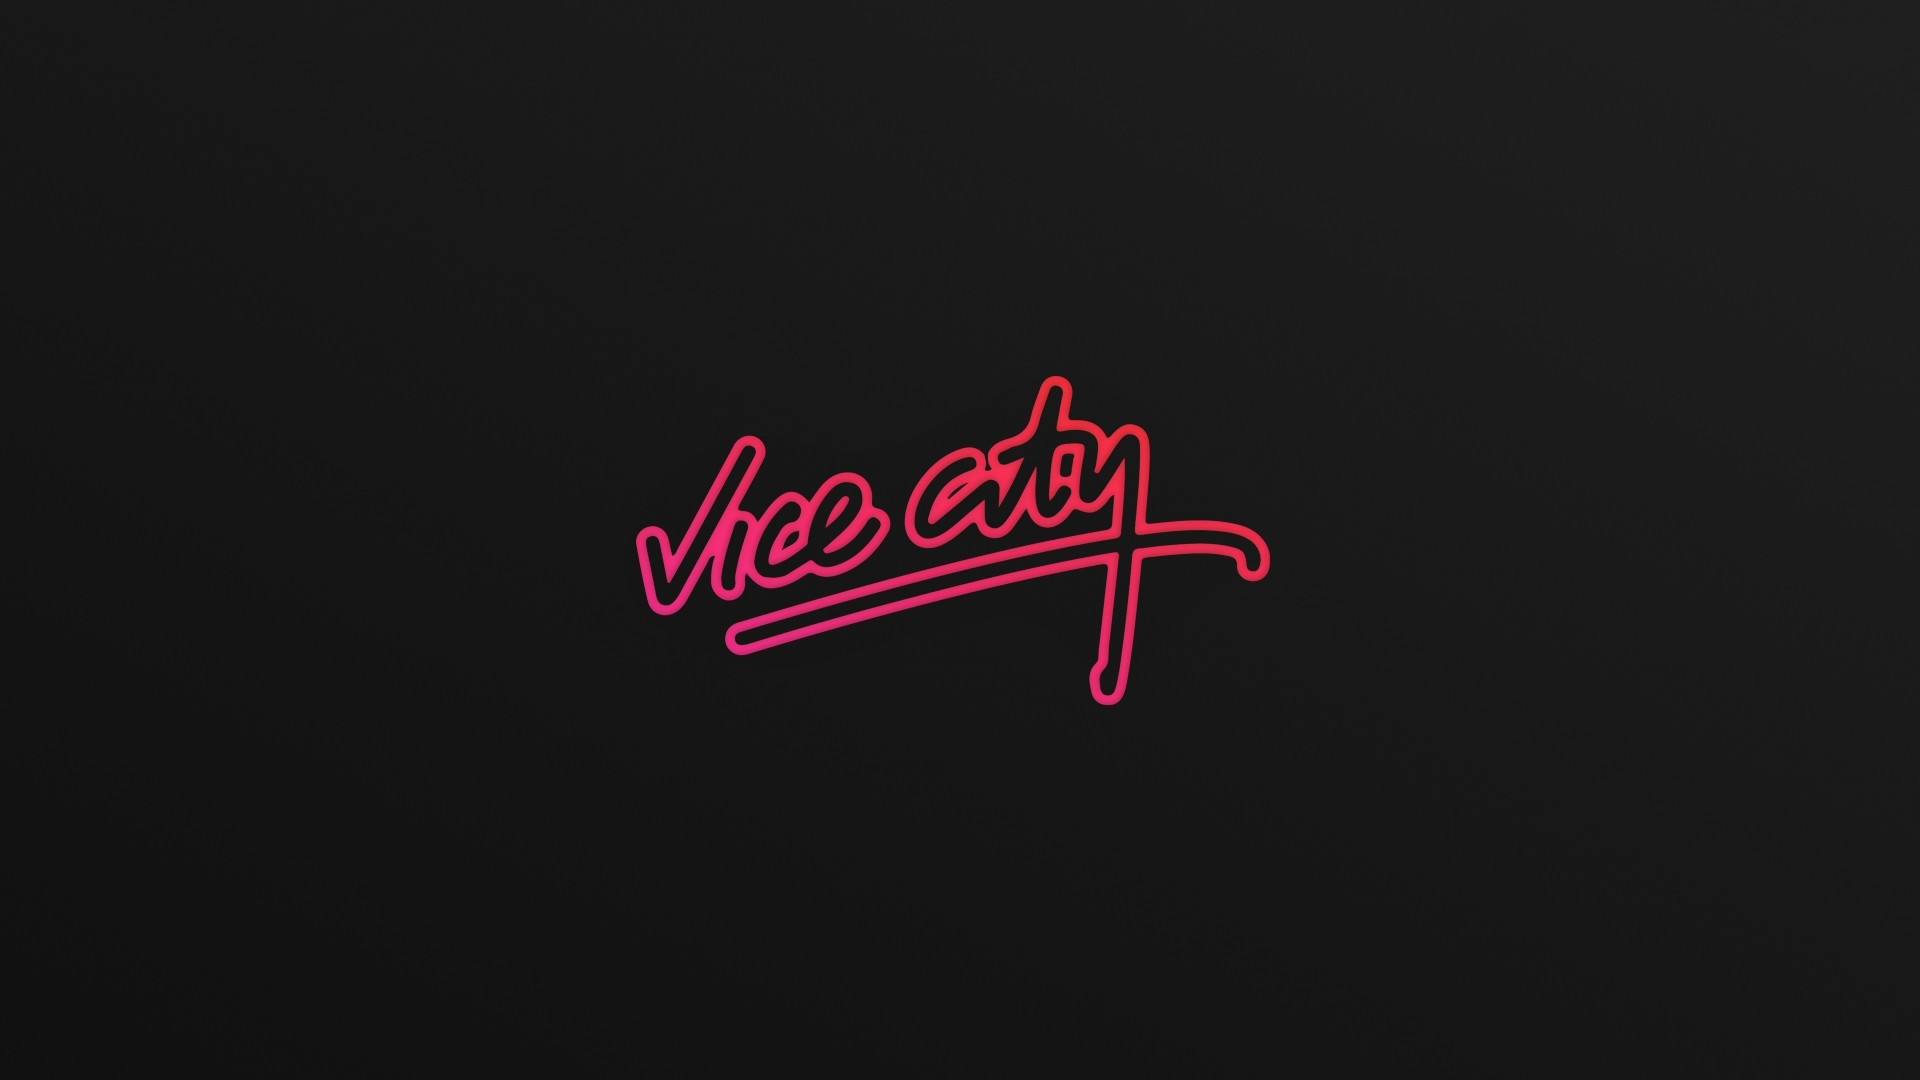 Vice City обои на рабочий стол